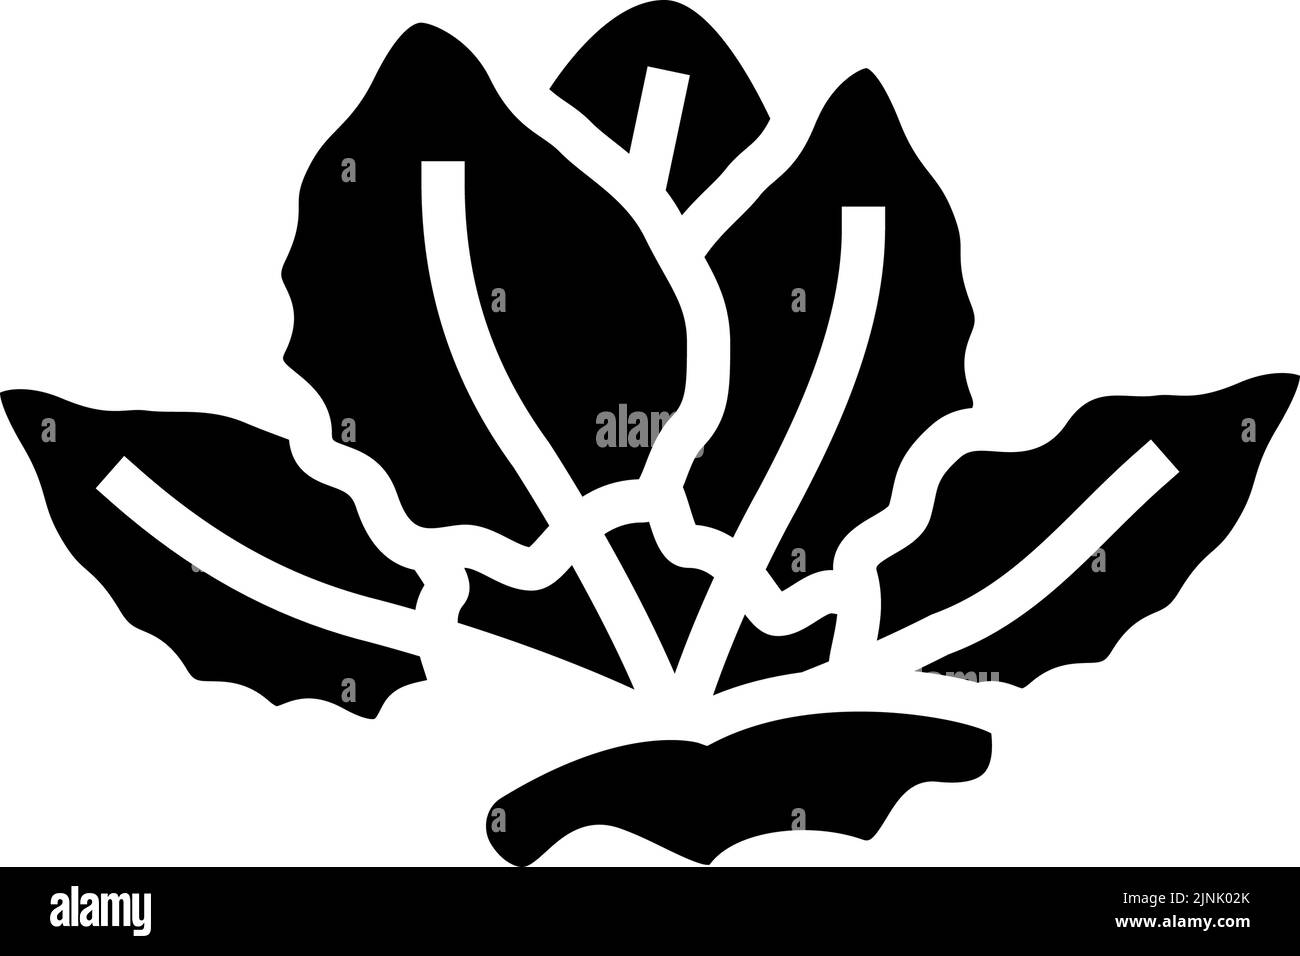 tiger lotus glyph icon vector illustration Stock Vector